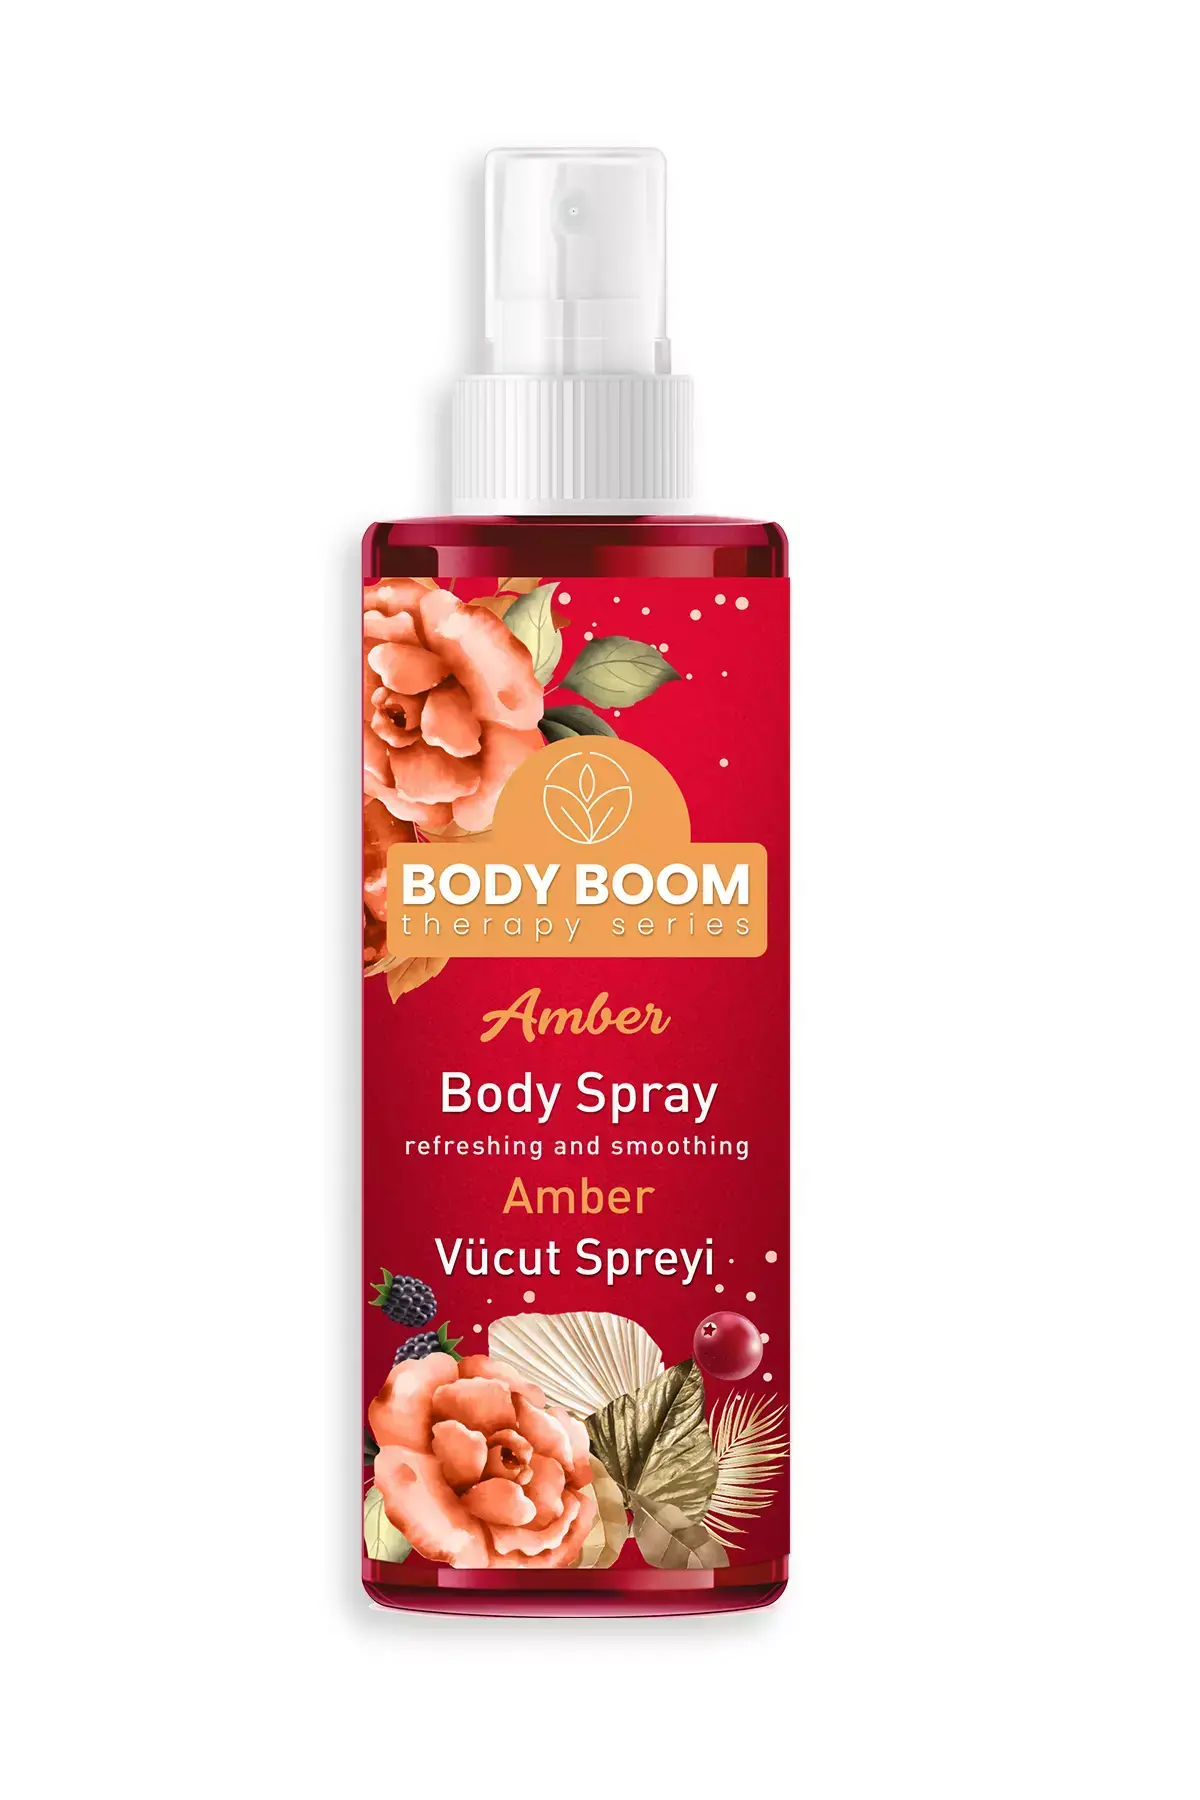 BODY BOOM Amber Body Spray 100 ML - 3